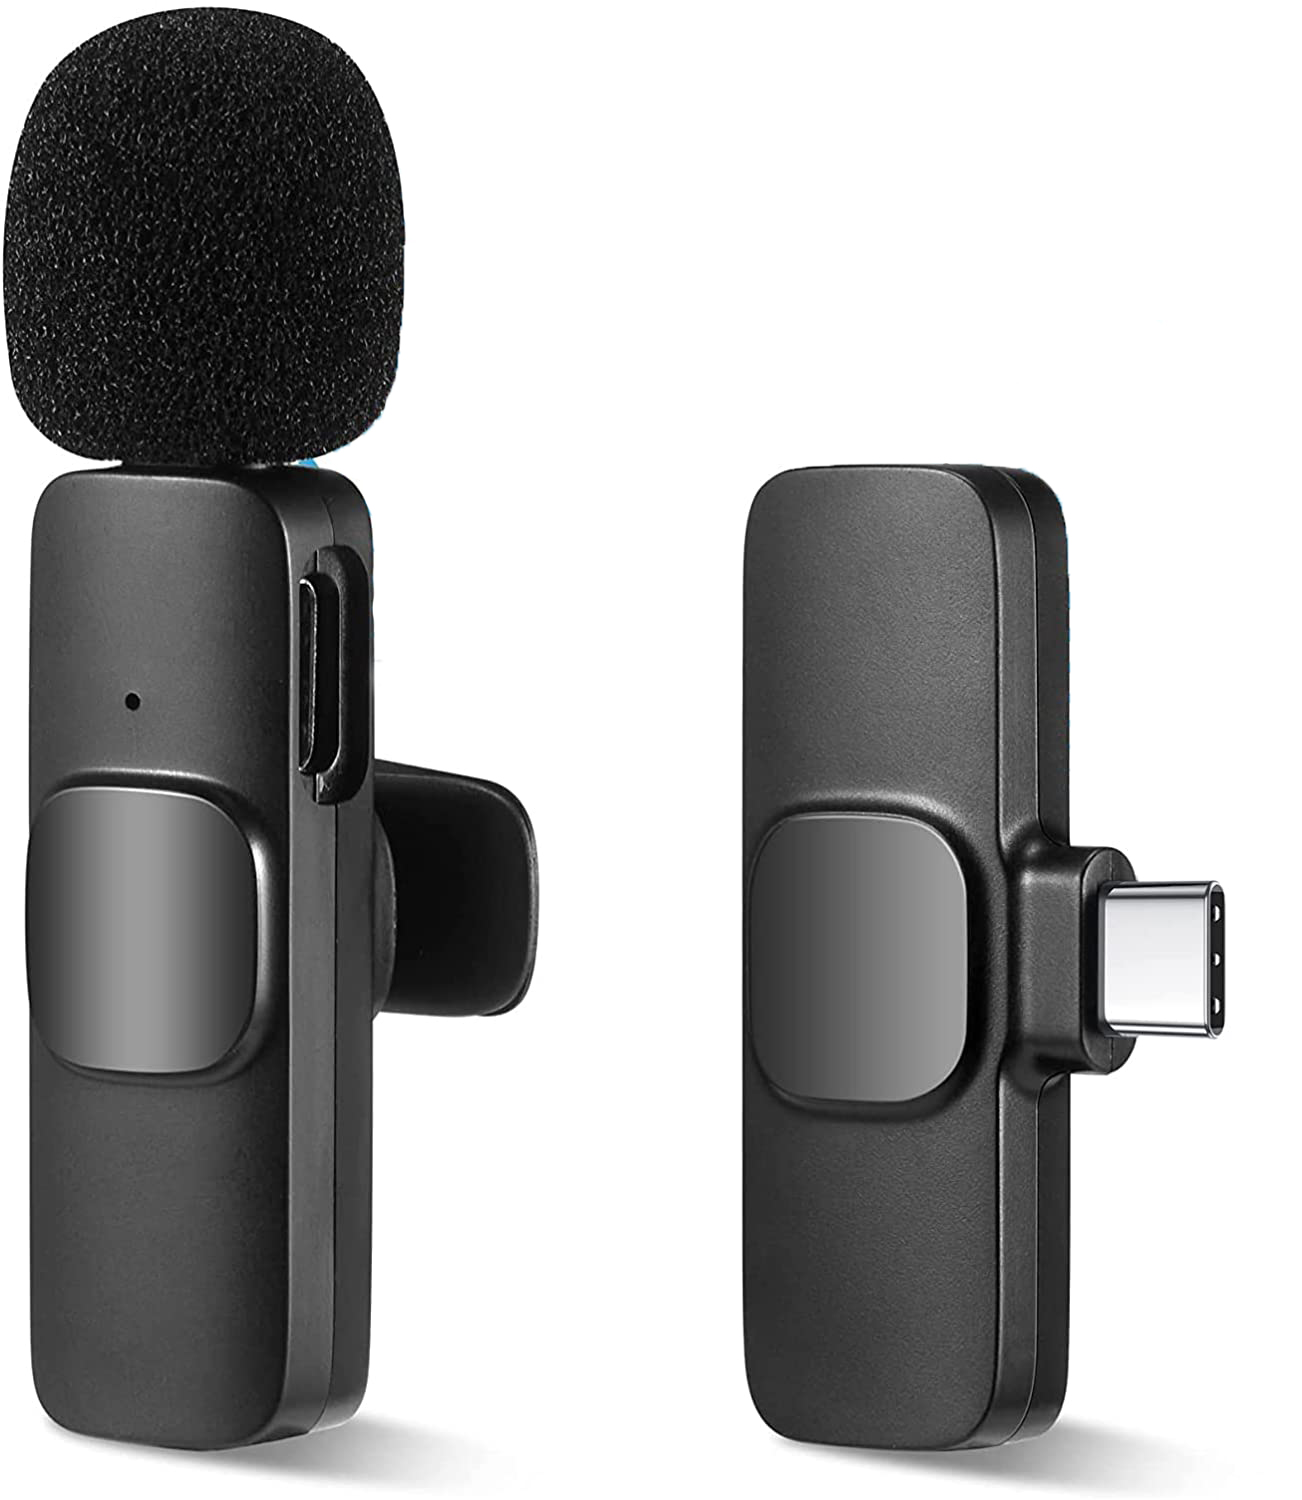 Microfon lavaliera wireless Techone K9 pentru Android Type C, auto-imperechere, plug and play, omnidirectional, reducere zgomot de fond, pentru vlog, youtube, negru